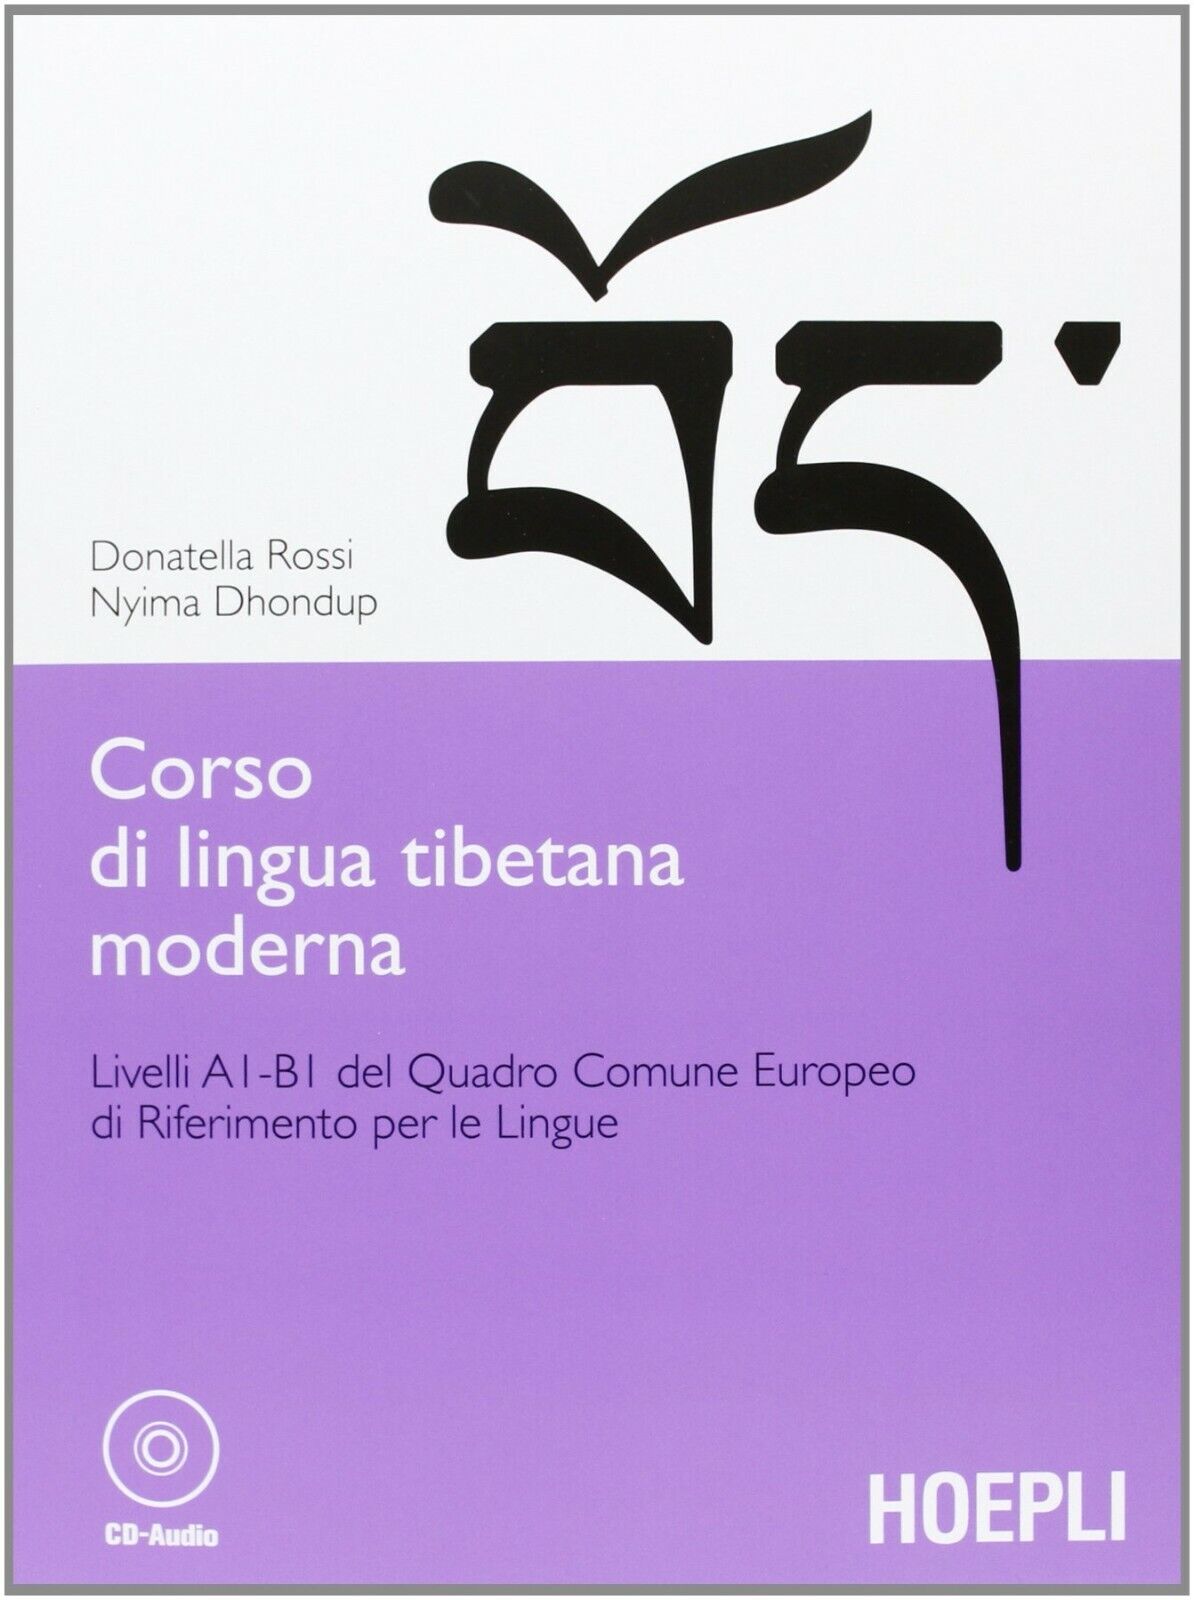 Corso di lingua tibetana moderna - Donatella Rossi, Nyima Dhondup,  2013, Hoepli libro usato